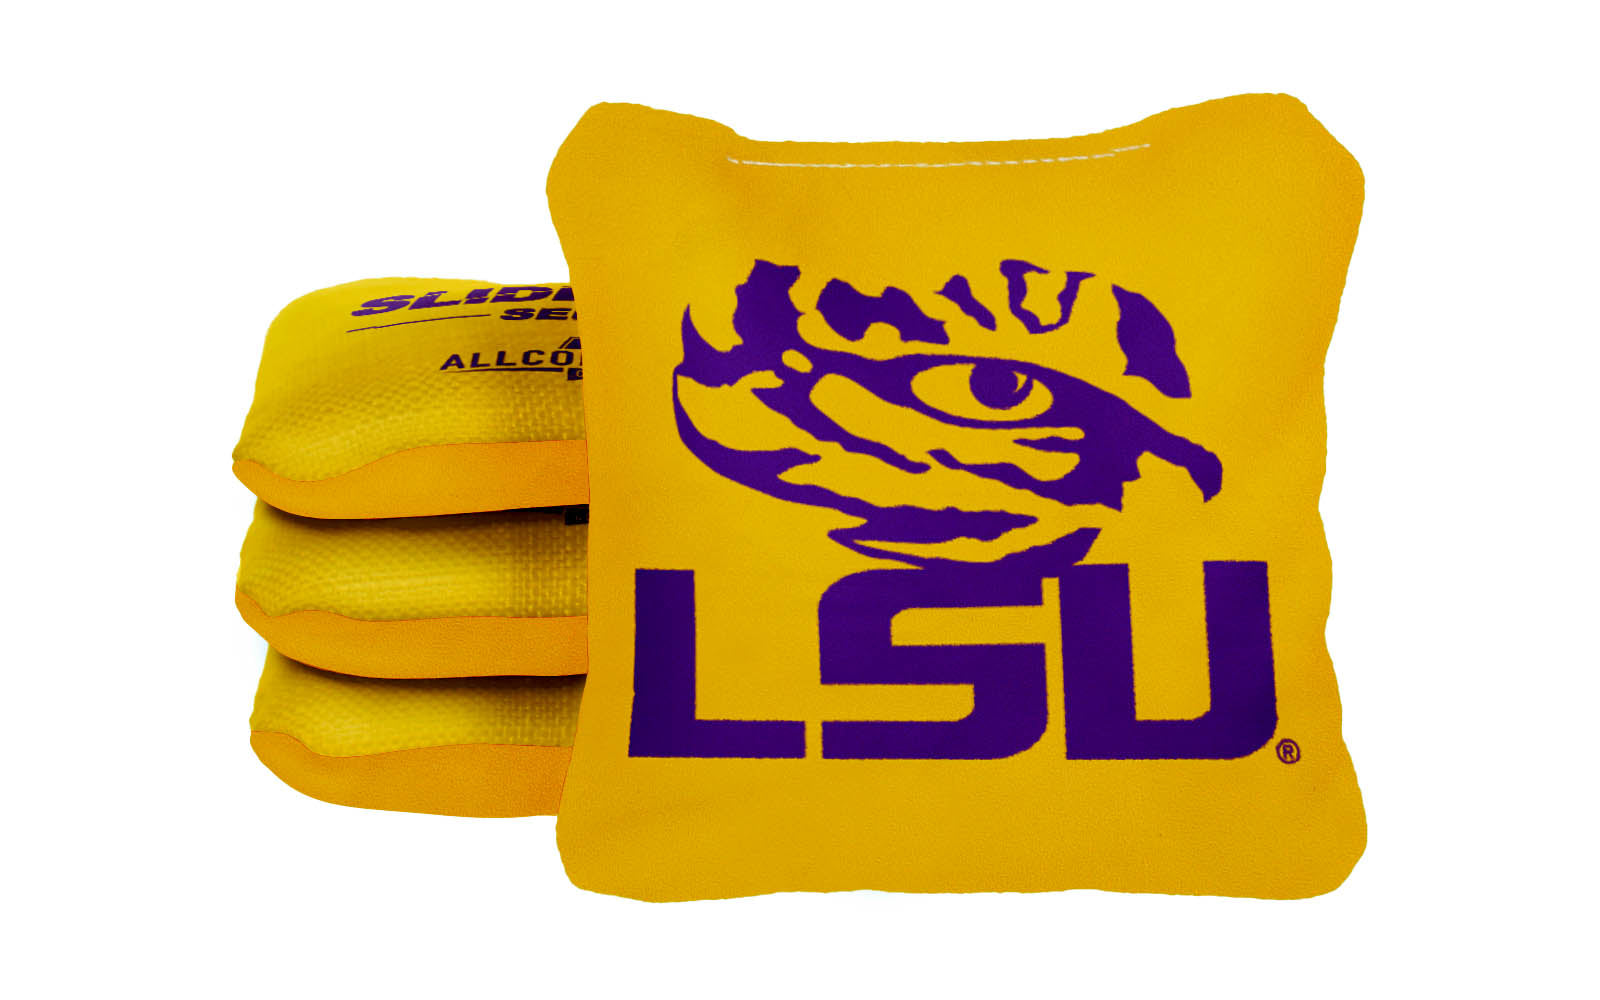 Officially Licensed Collegiate Cornhole Bags - AllCornhole Slide Rite - Set of 4 - Louisiana State University